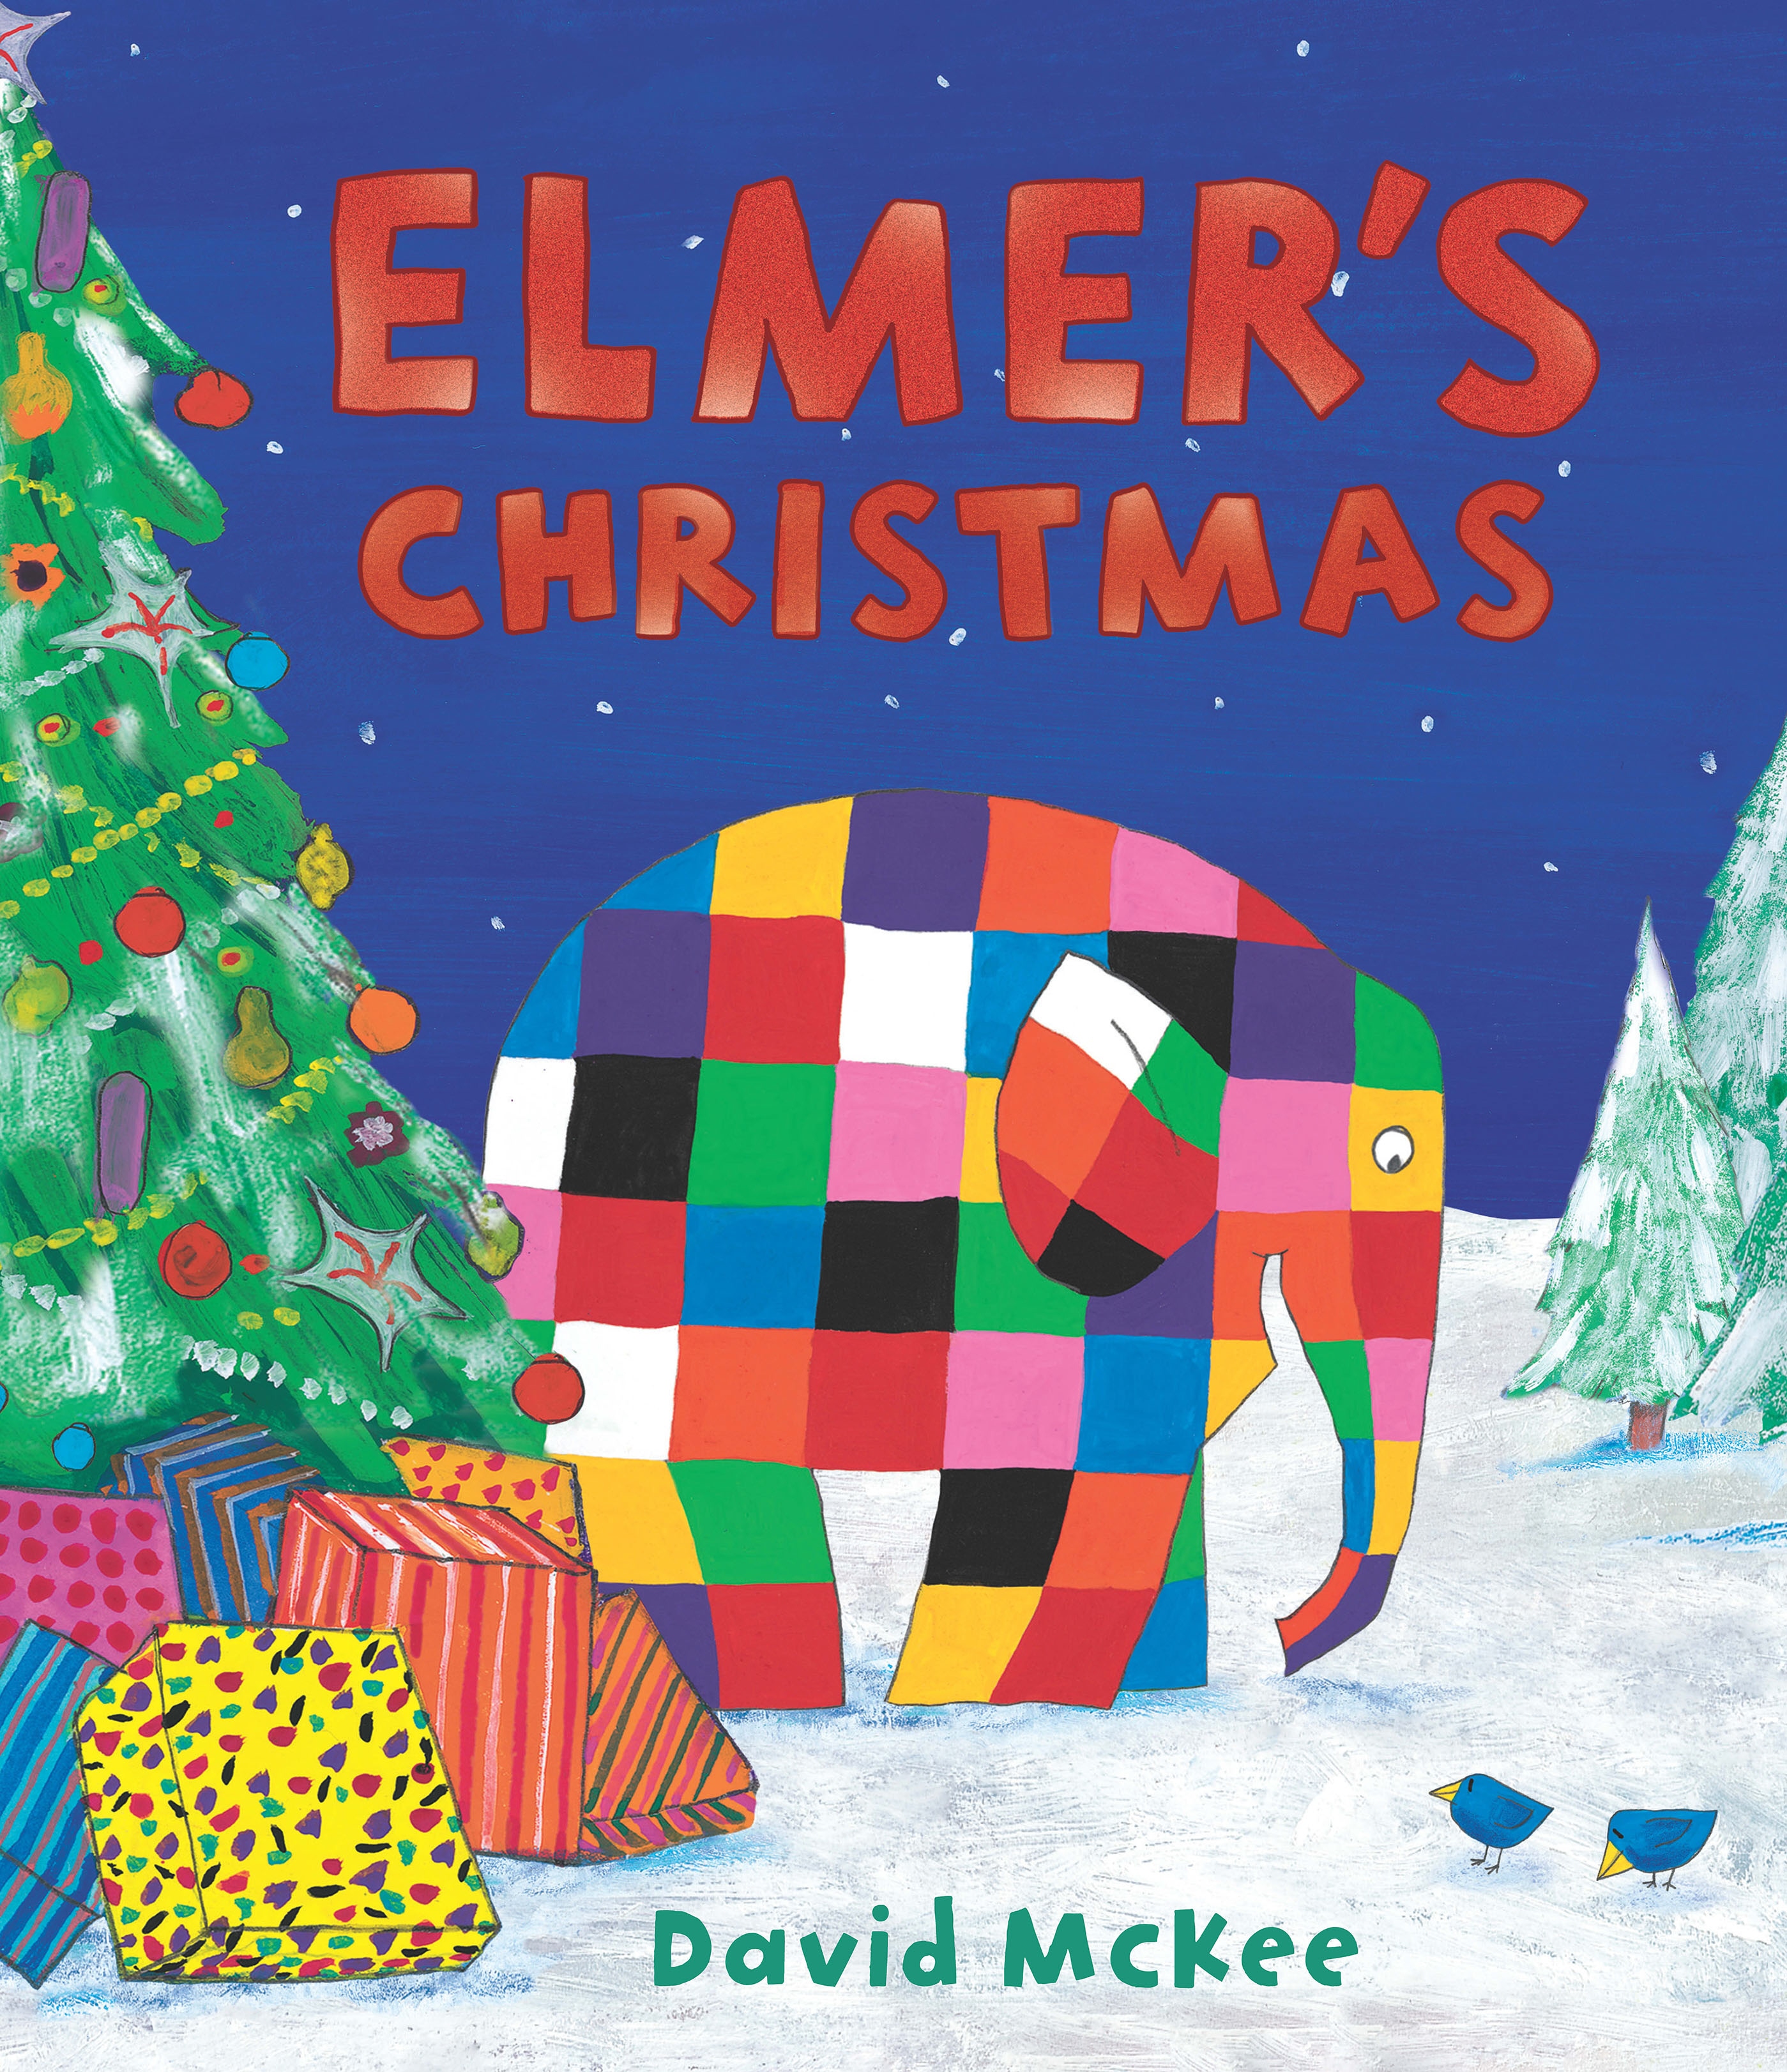 Book “Elmer's Christmas” by David McKee — September 3, 2015